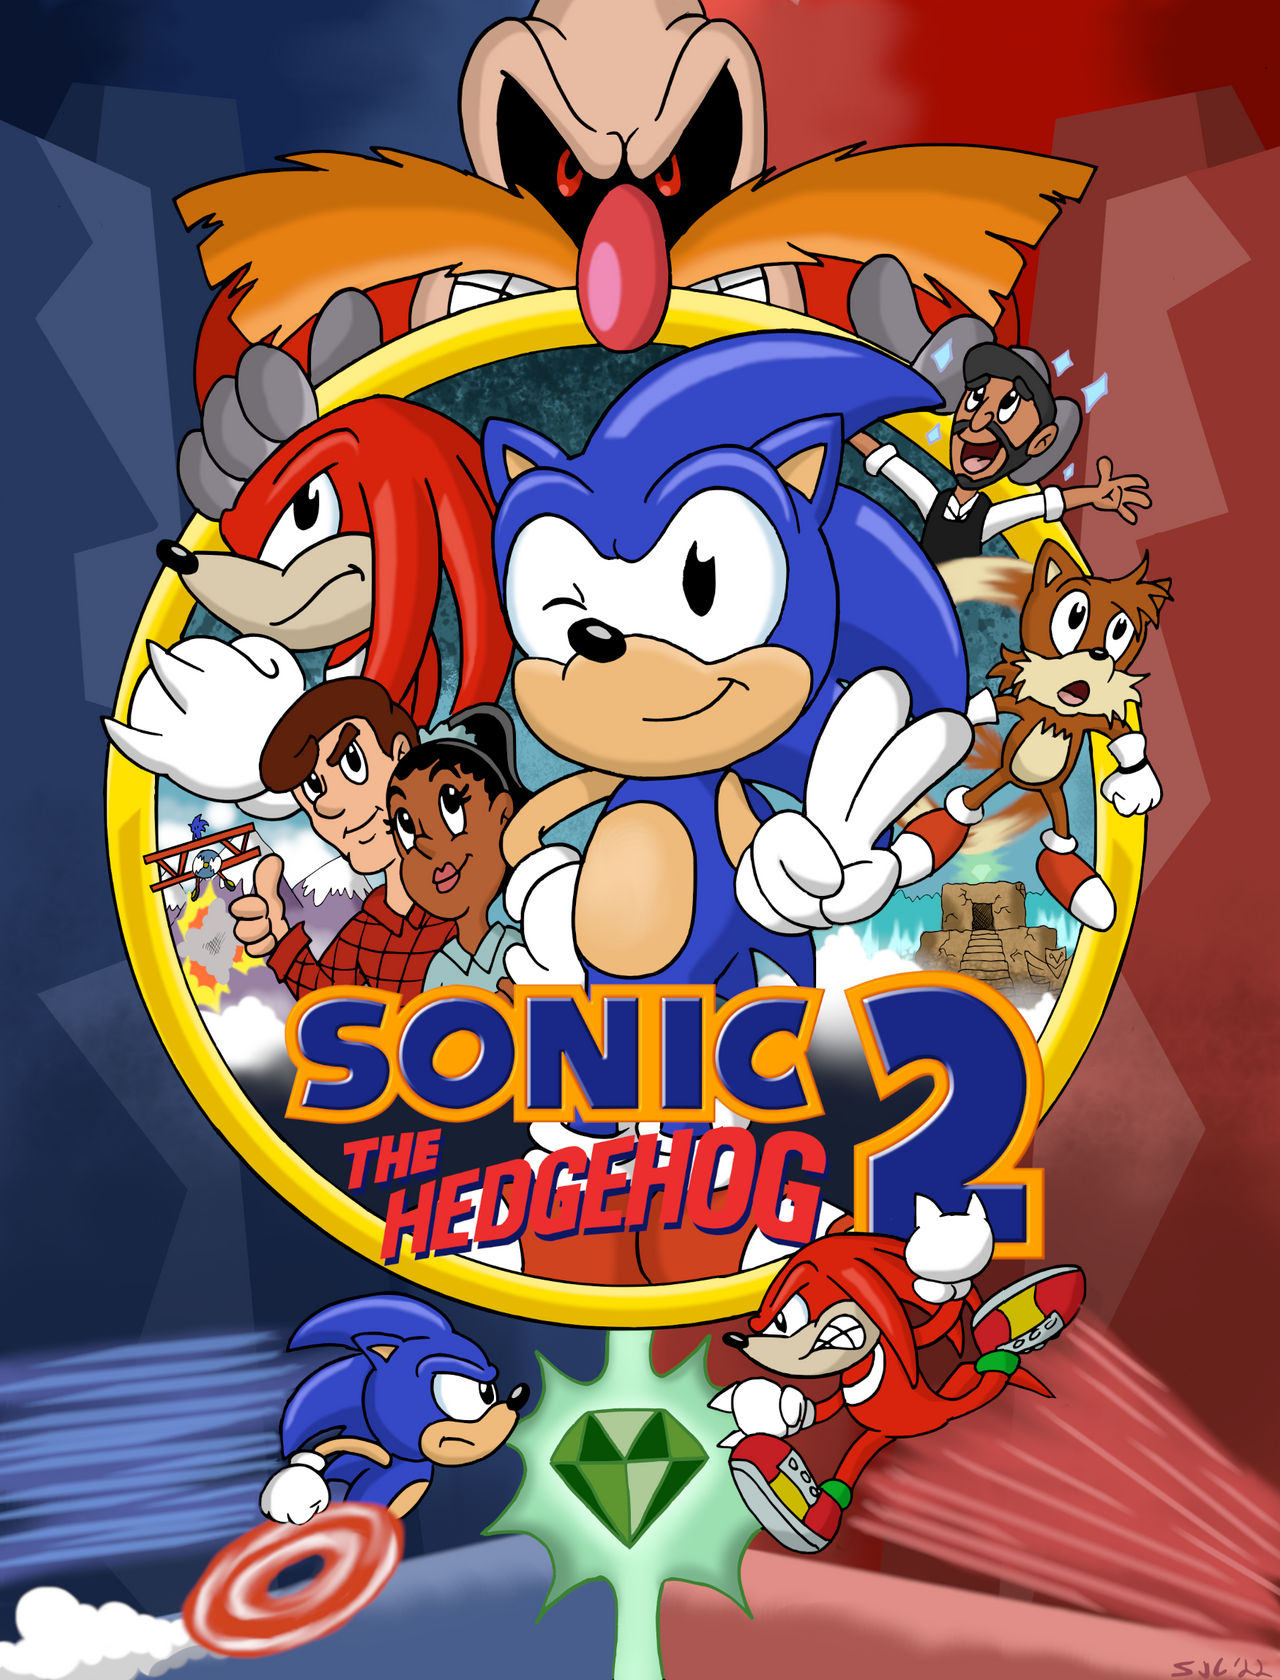 Sonic 2 o Filme capa by ALIX2002 on DeviantArt